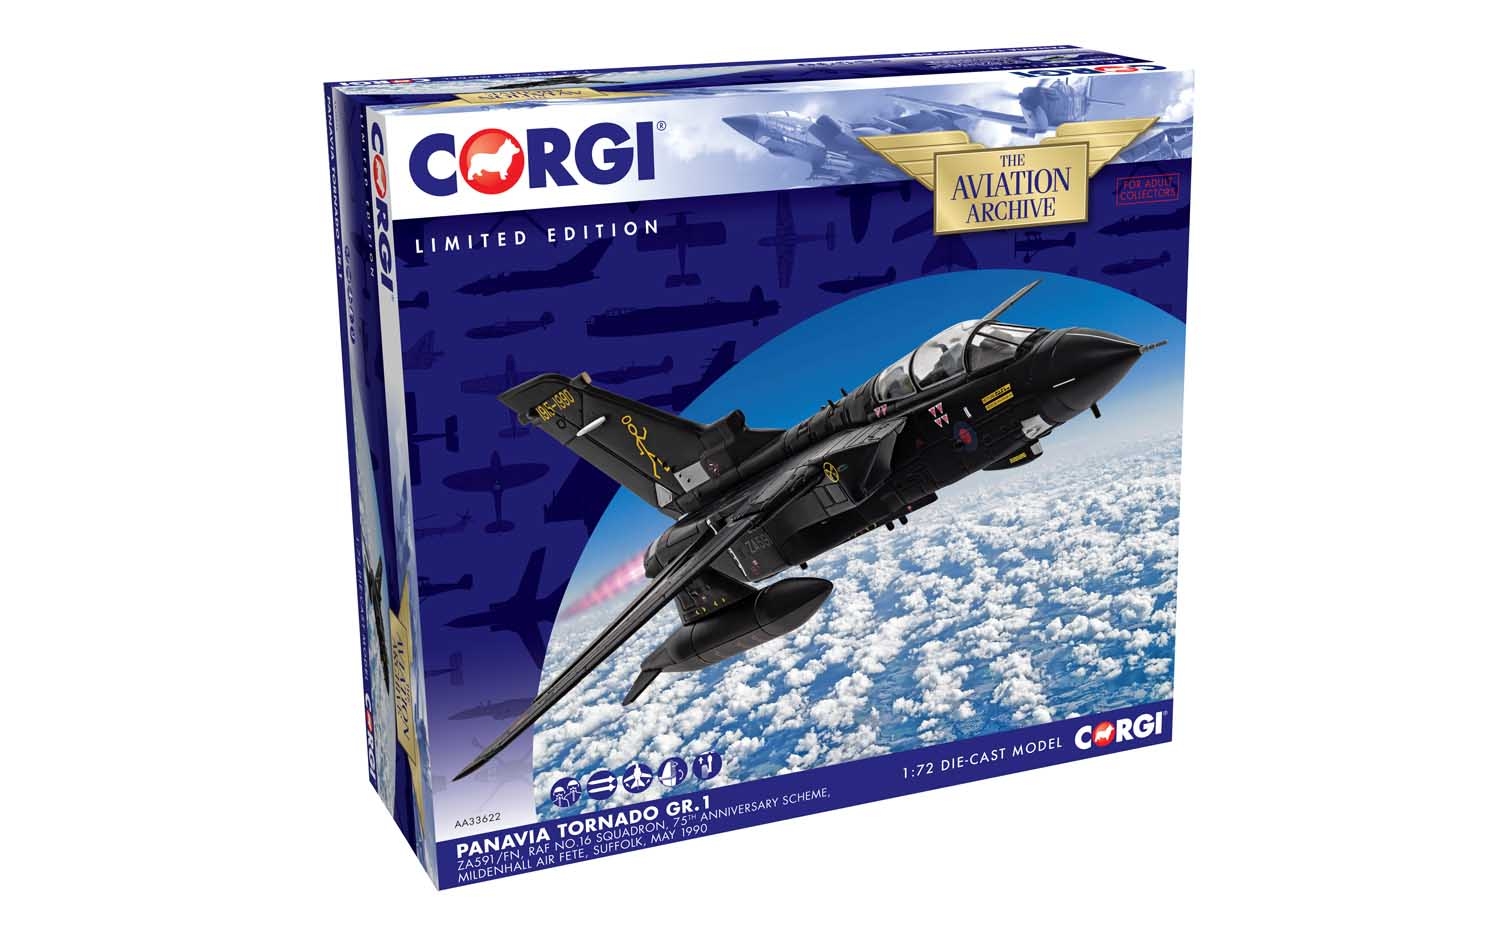 Corgi Aviation Archive Panavia Tornado Gr.1 RAF 16 Squadron 1990 AA33622 for sale online 